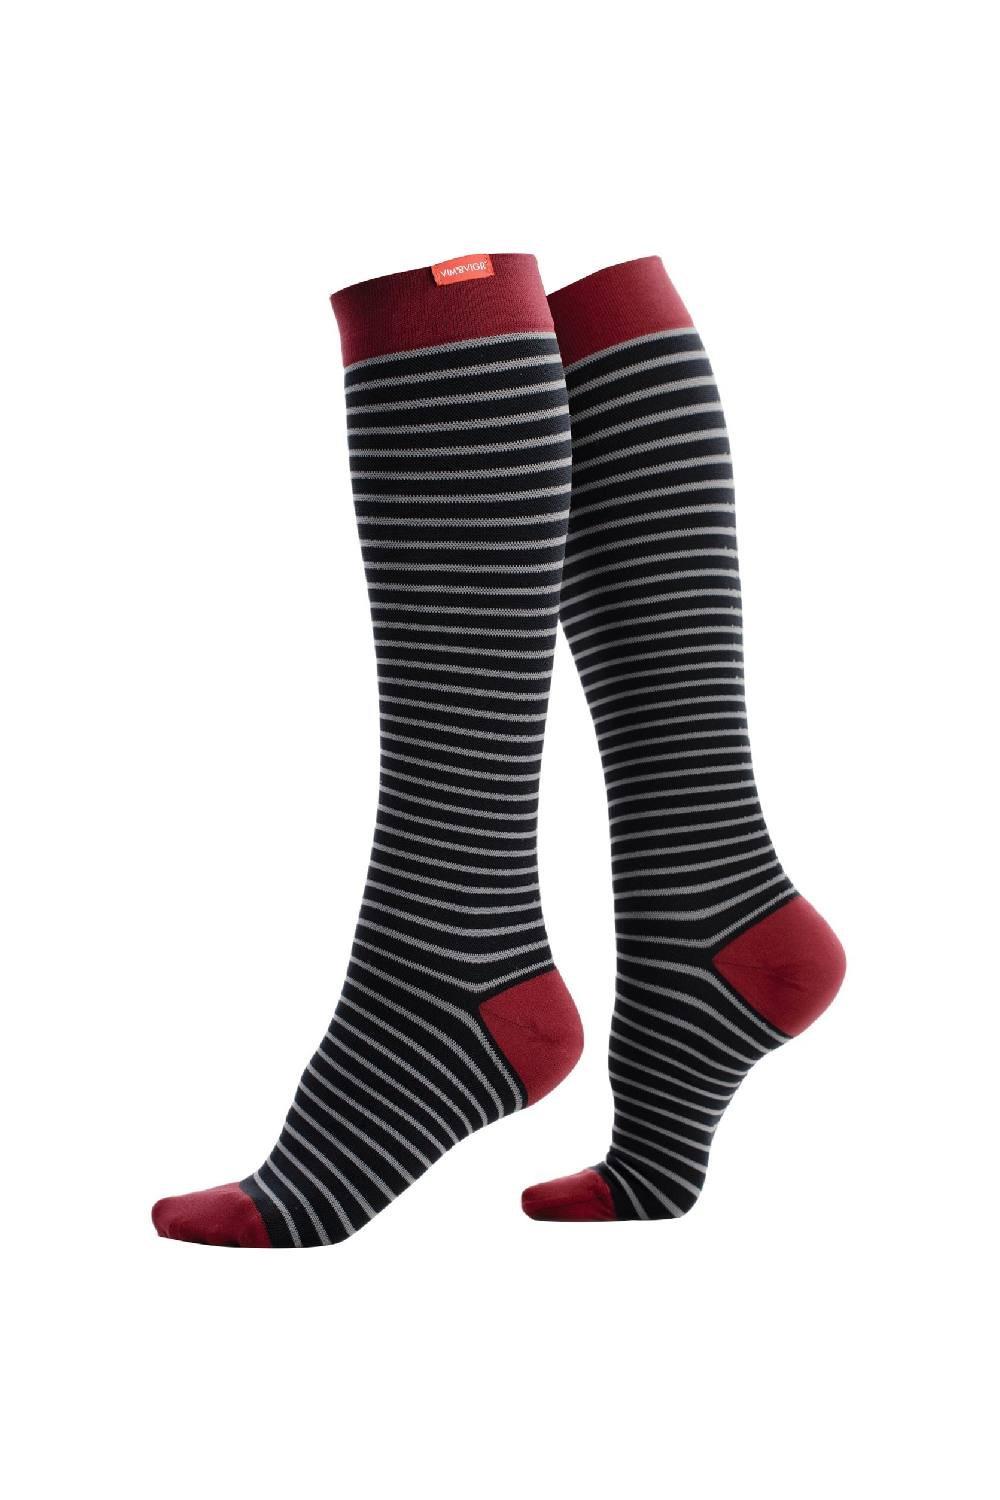 Wide Calf Graduated Compression Socks 30-40 mmhg with Nylon